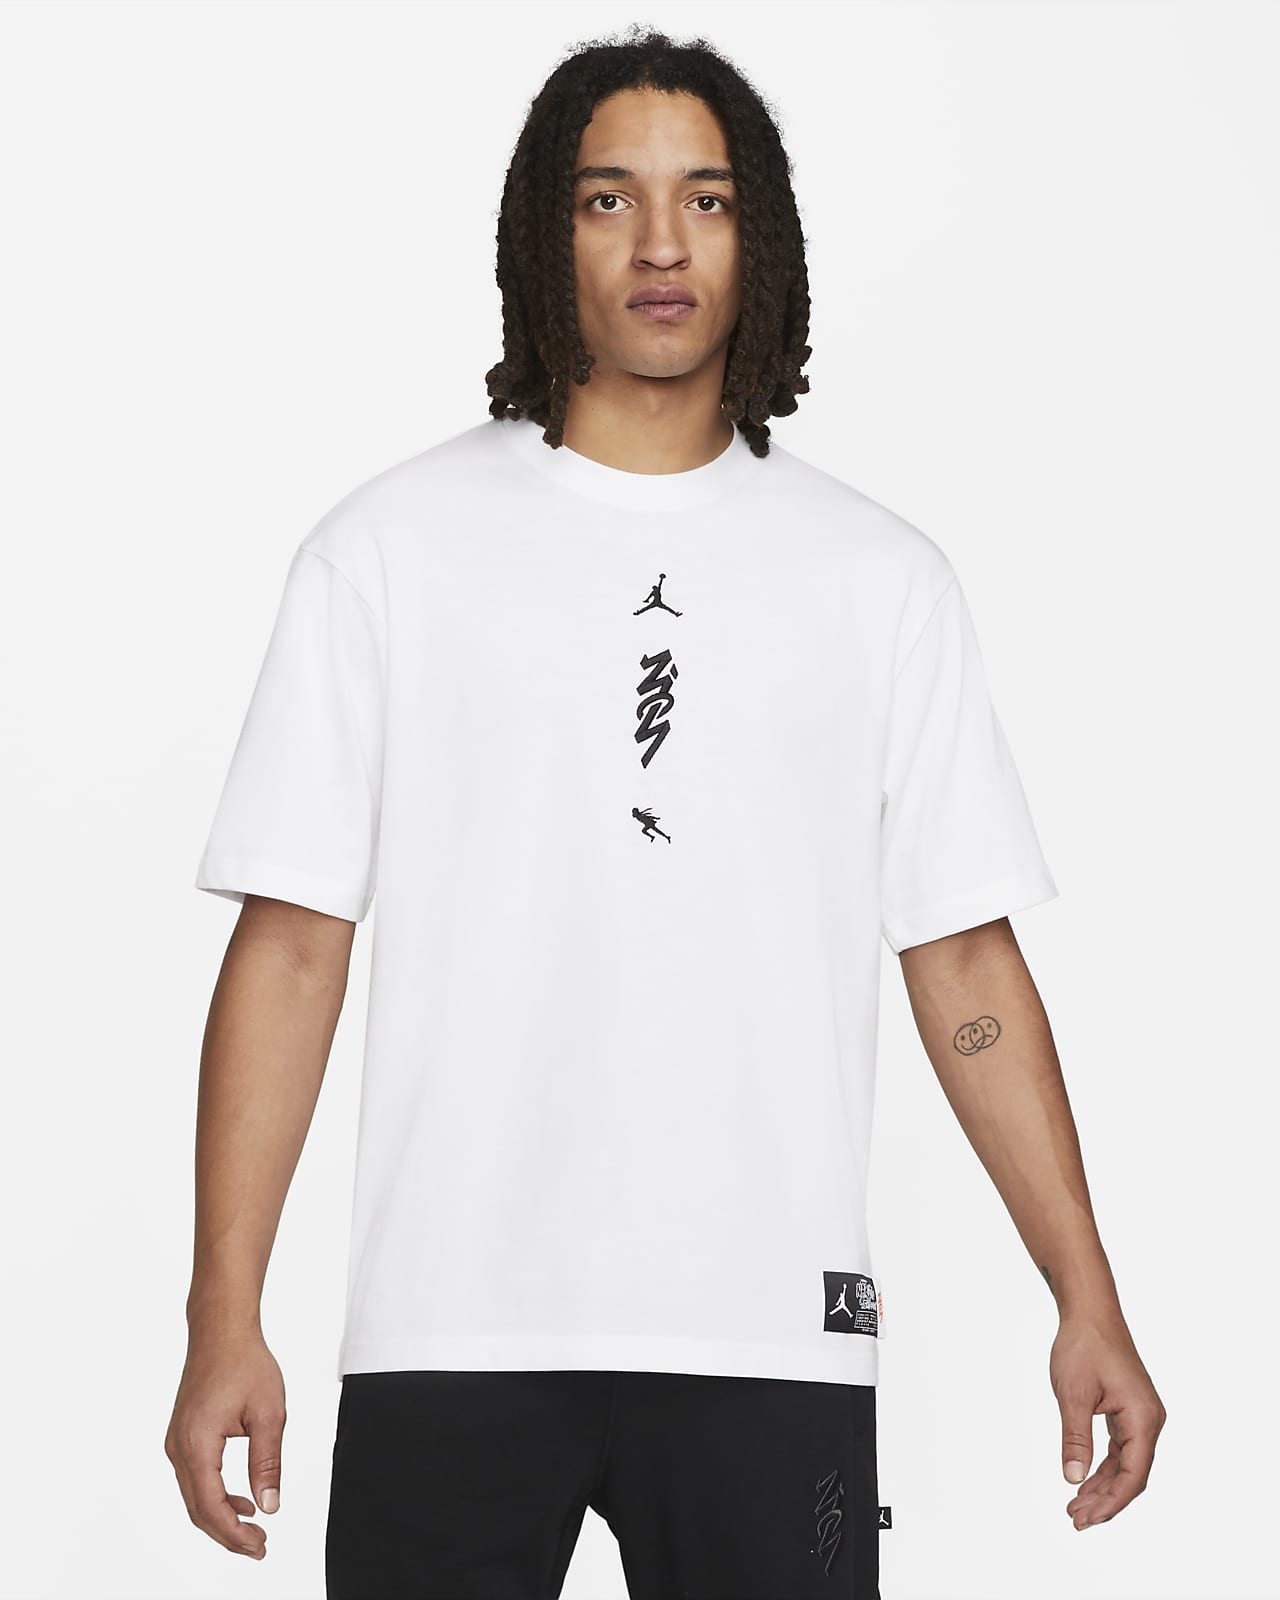 Jordan x Zion Men's T-Shirt